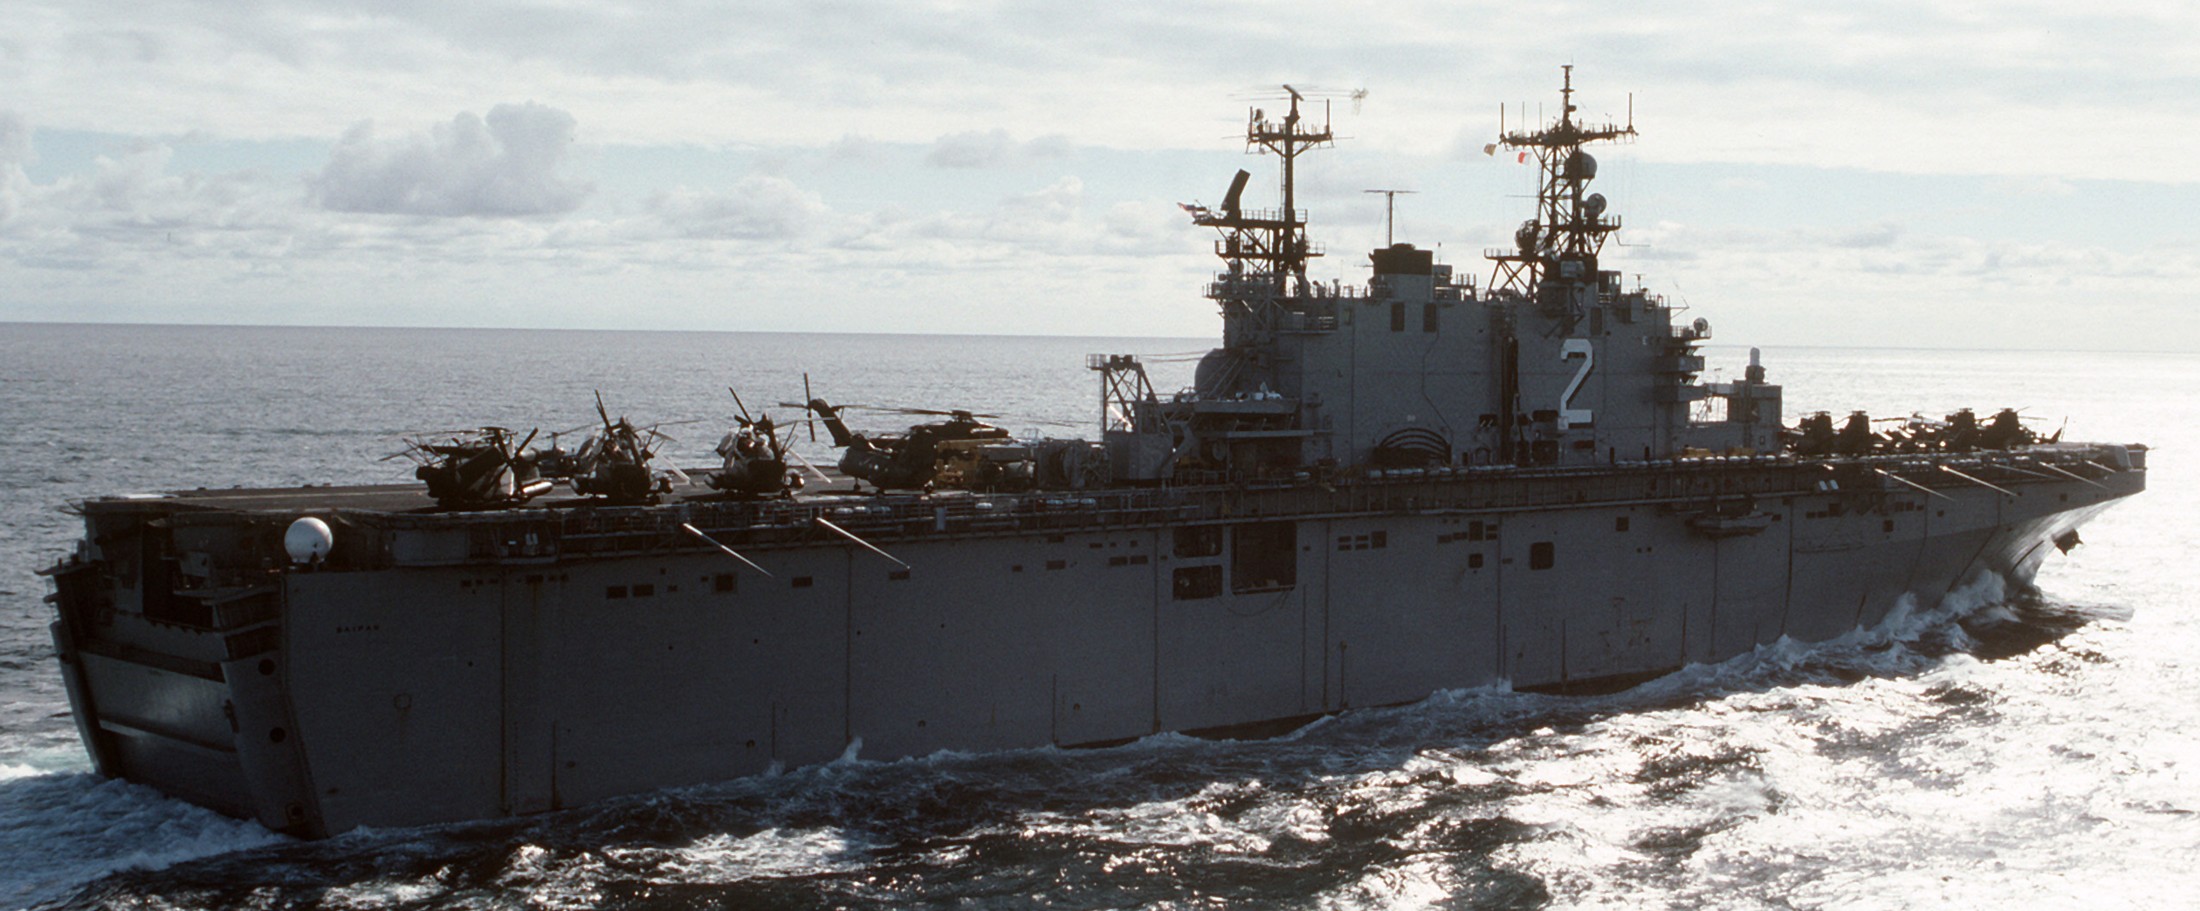 lha-2 uss saipan tarawa class amphibious assault ship us navy 22nd mau hmm-162 usmc nato exercise northern wedding 50